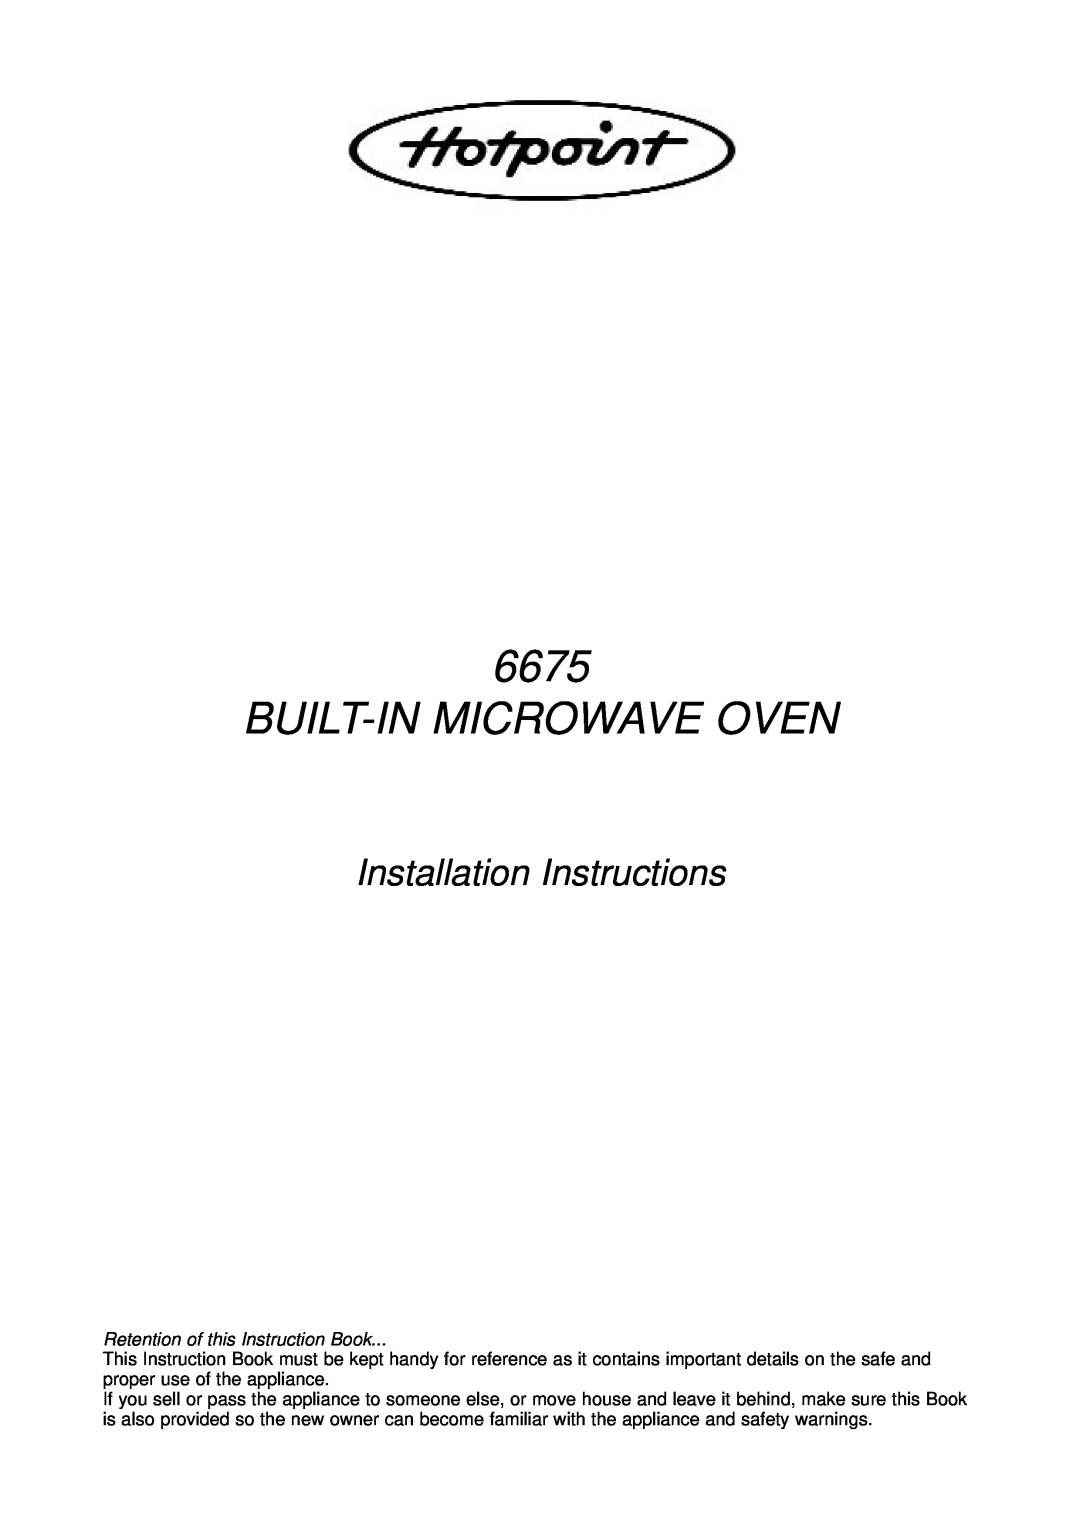 Hotpoint 6675 installation instructions Built-In Microwave Oven, Installation Instructions 